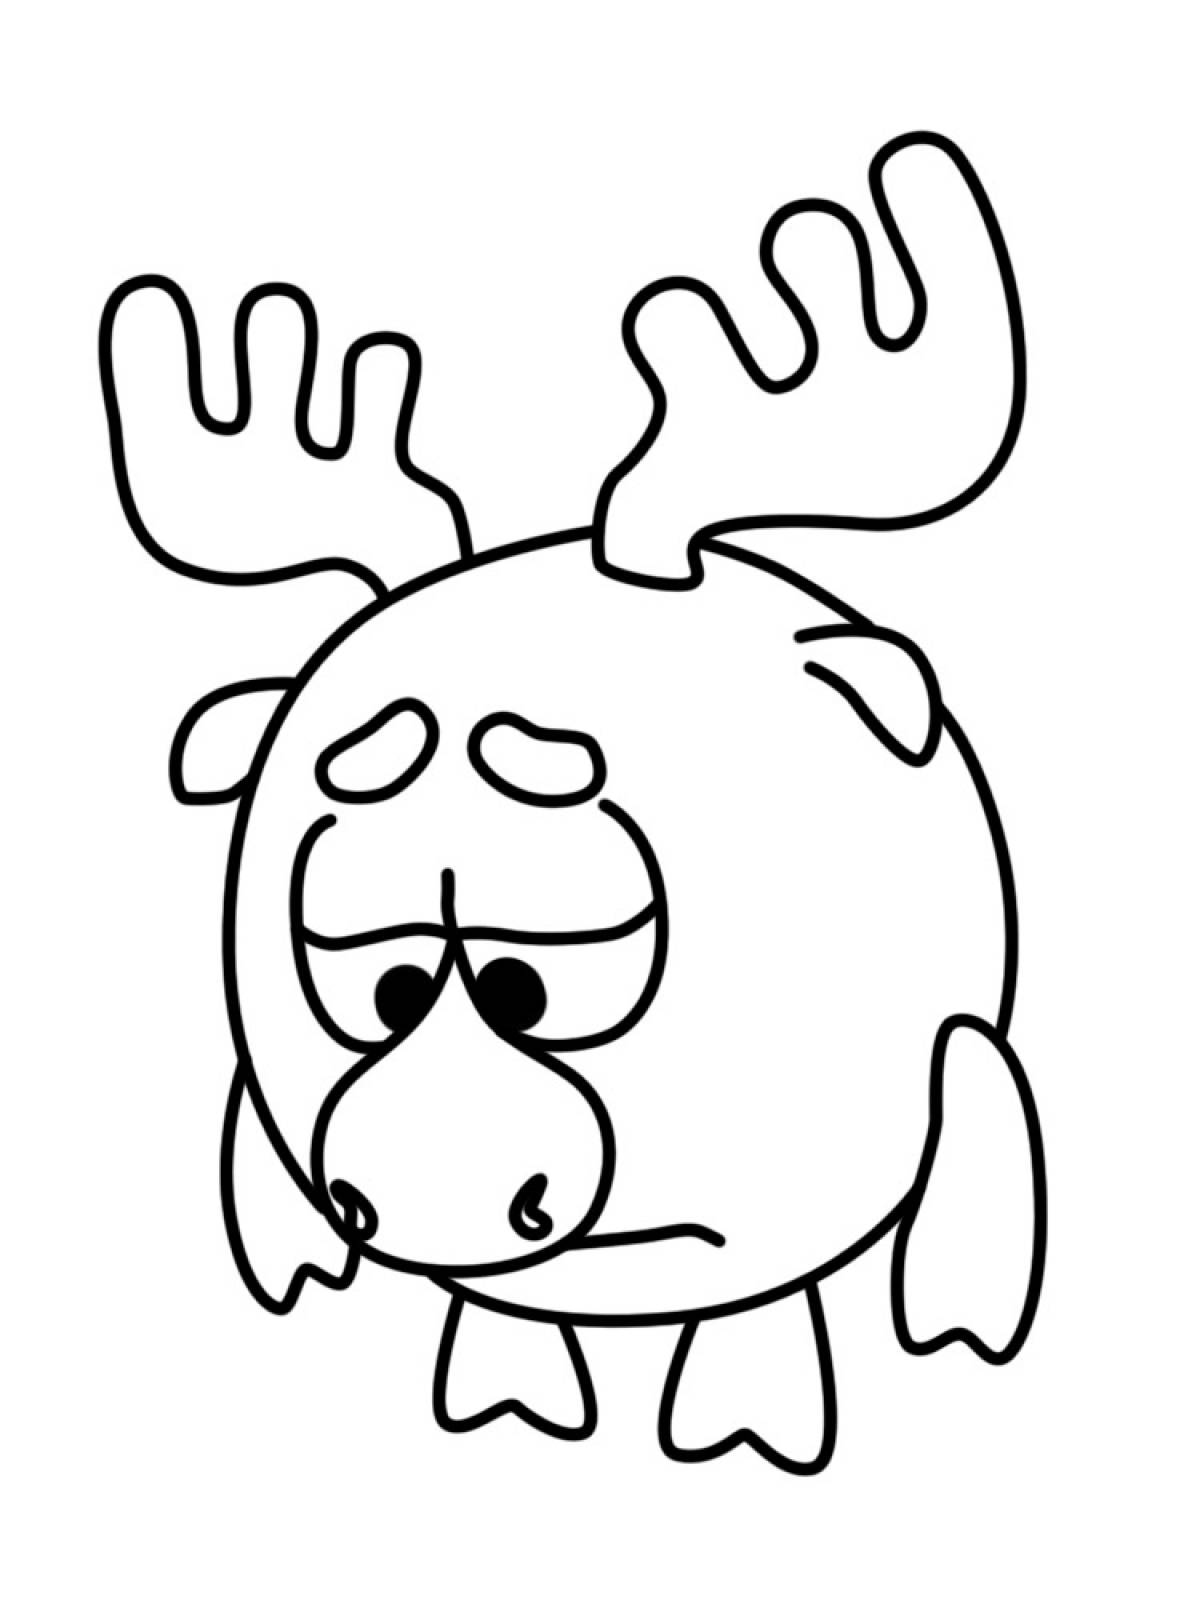 Sad moose